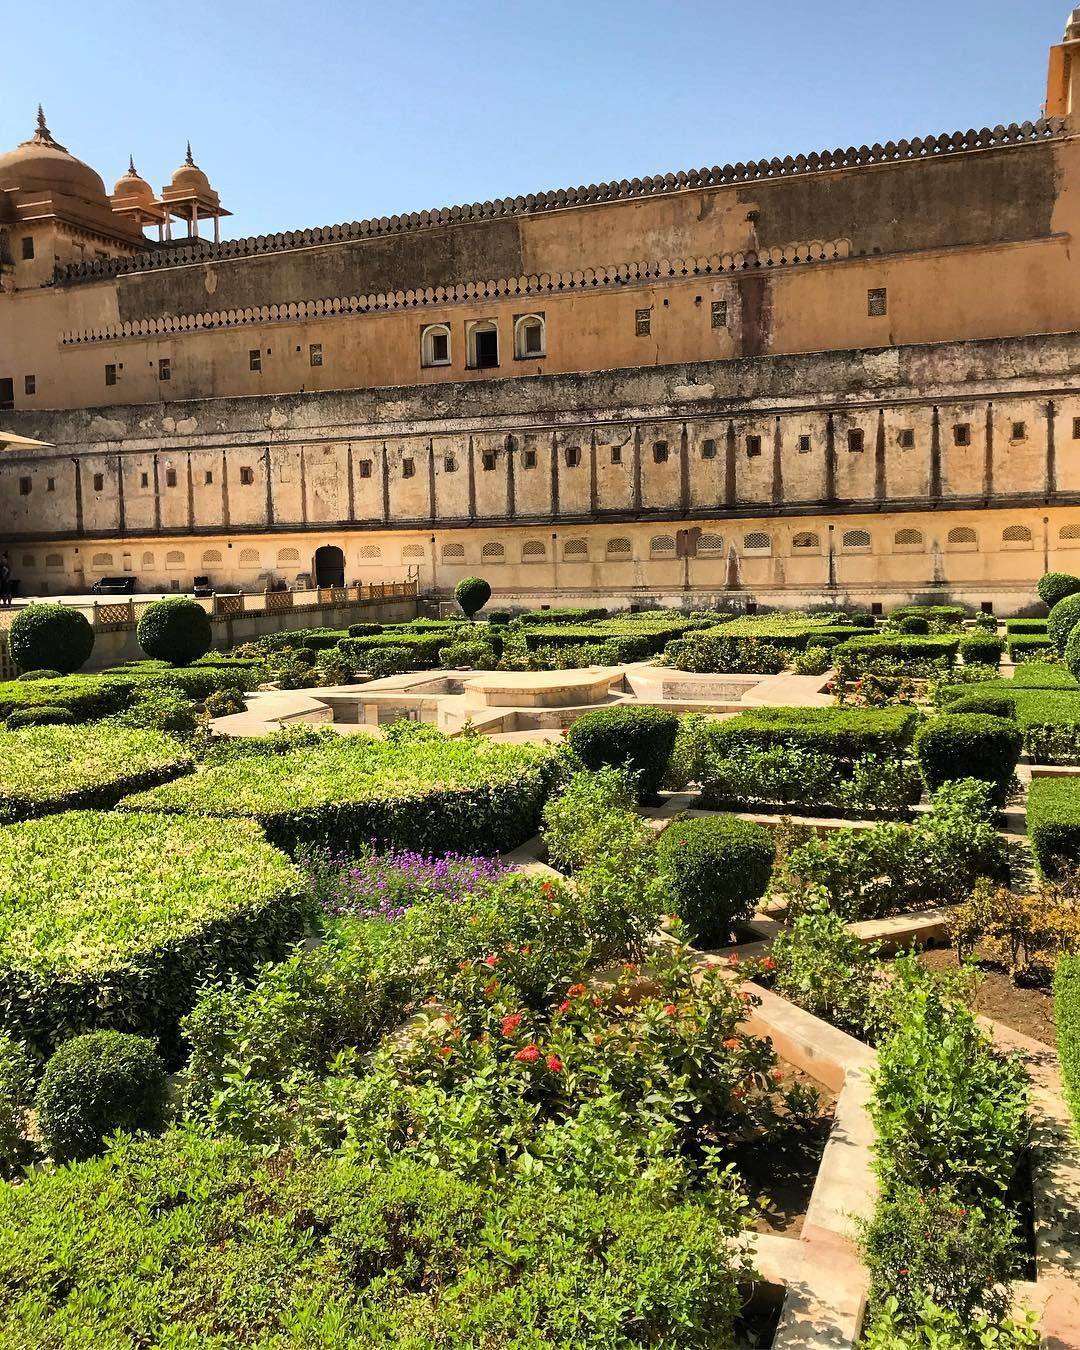 The Mughal Gardens